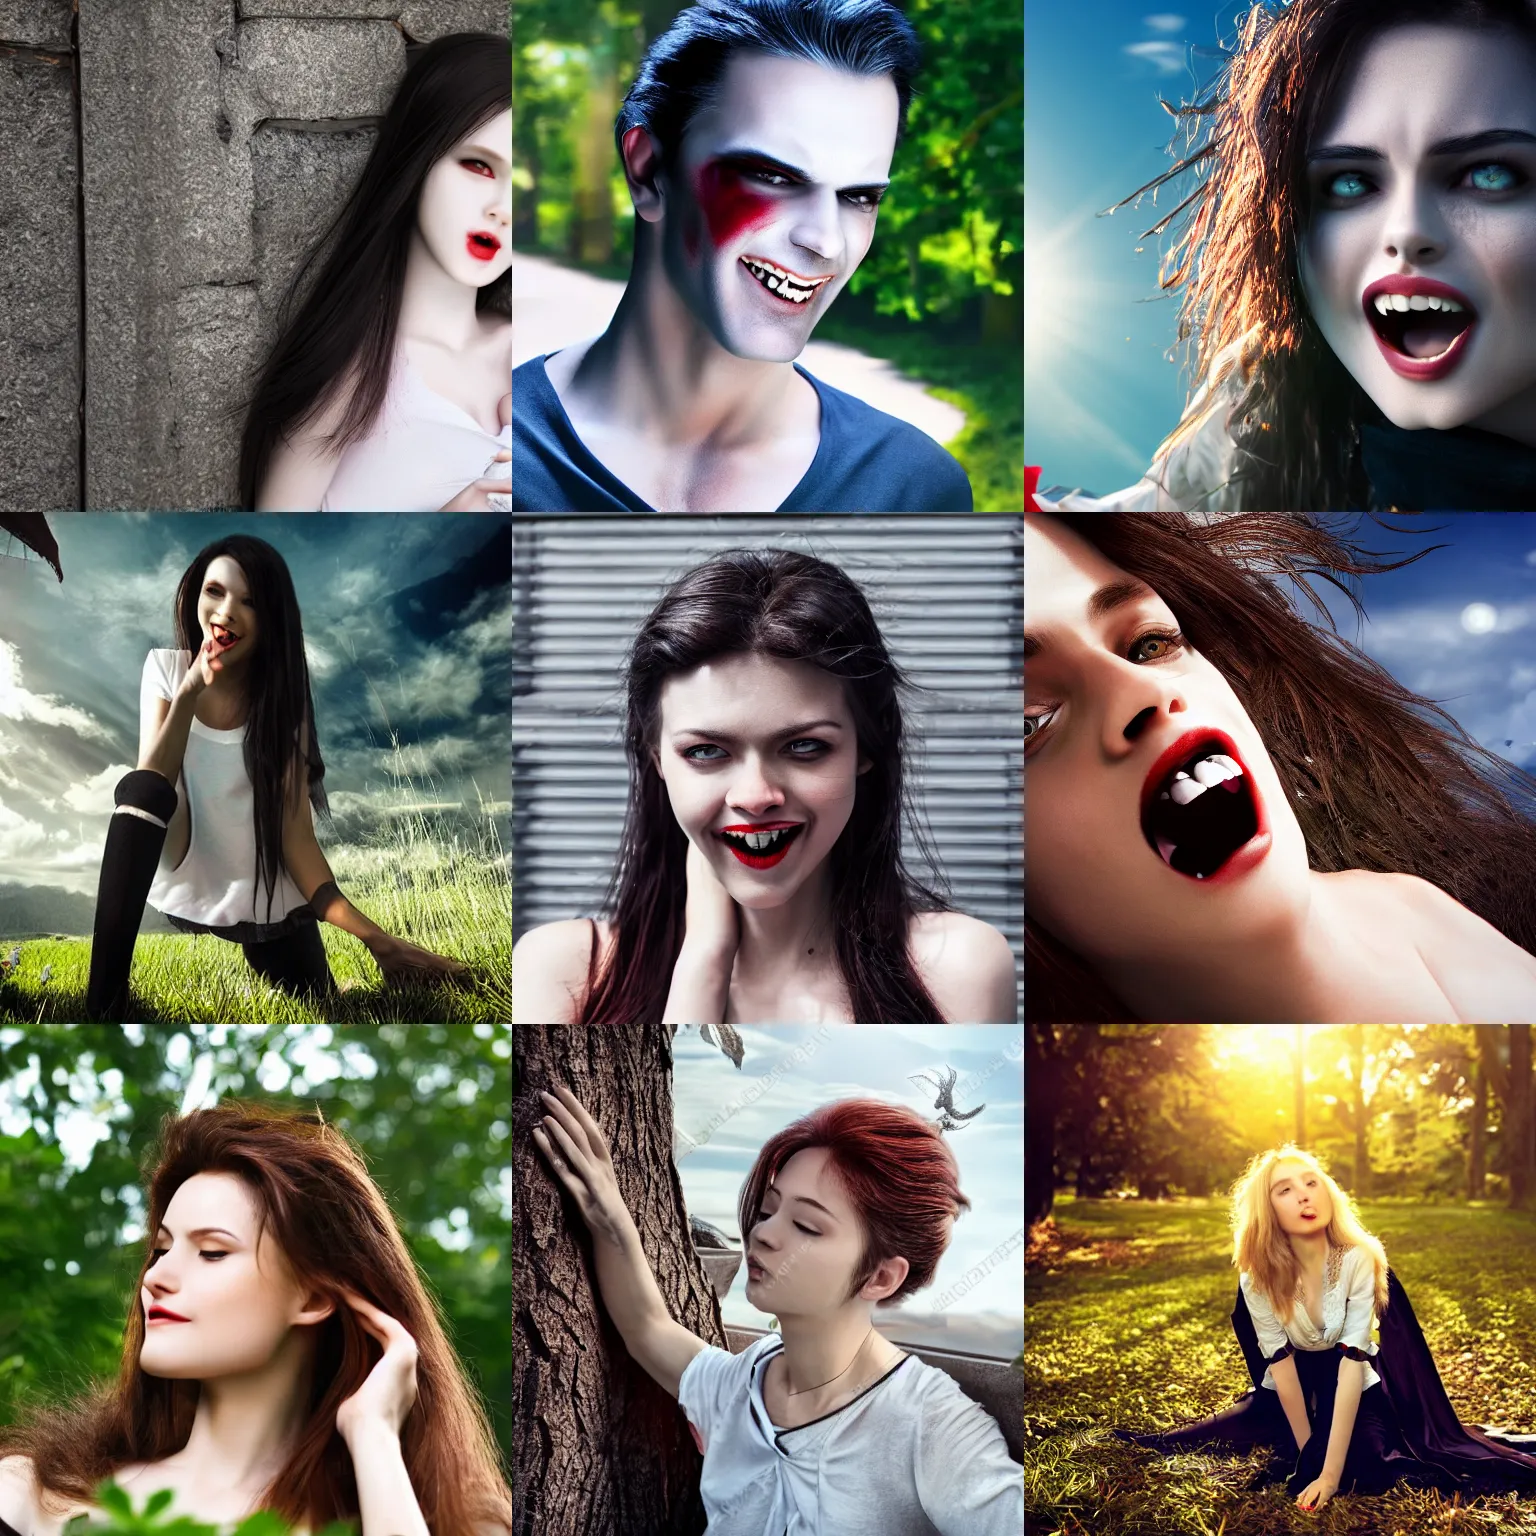 Prompt: Vampire enjoying fresh air and sunlight, HD 4k ultra, photorealistic, sony ultra camera hd+